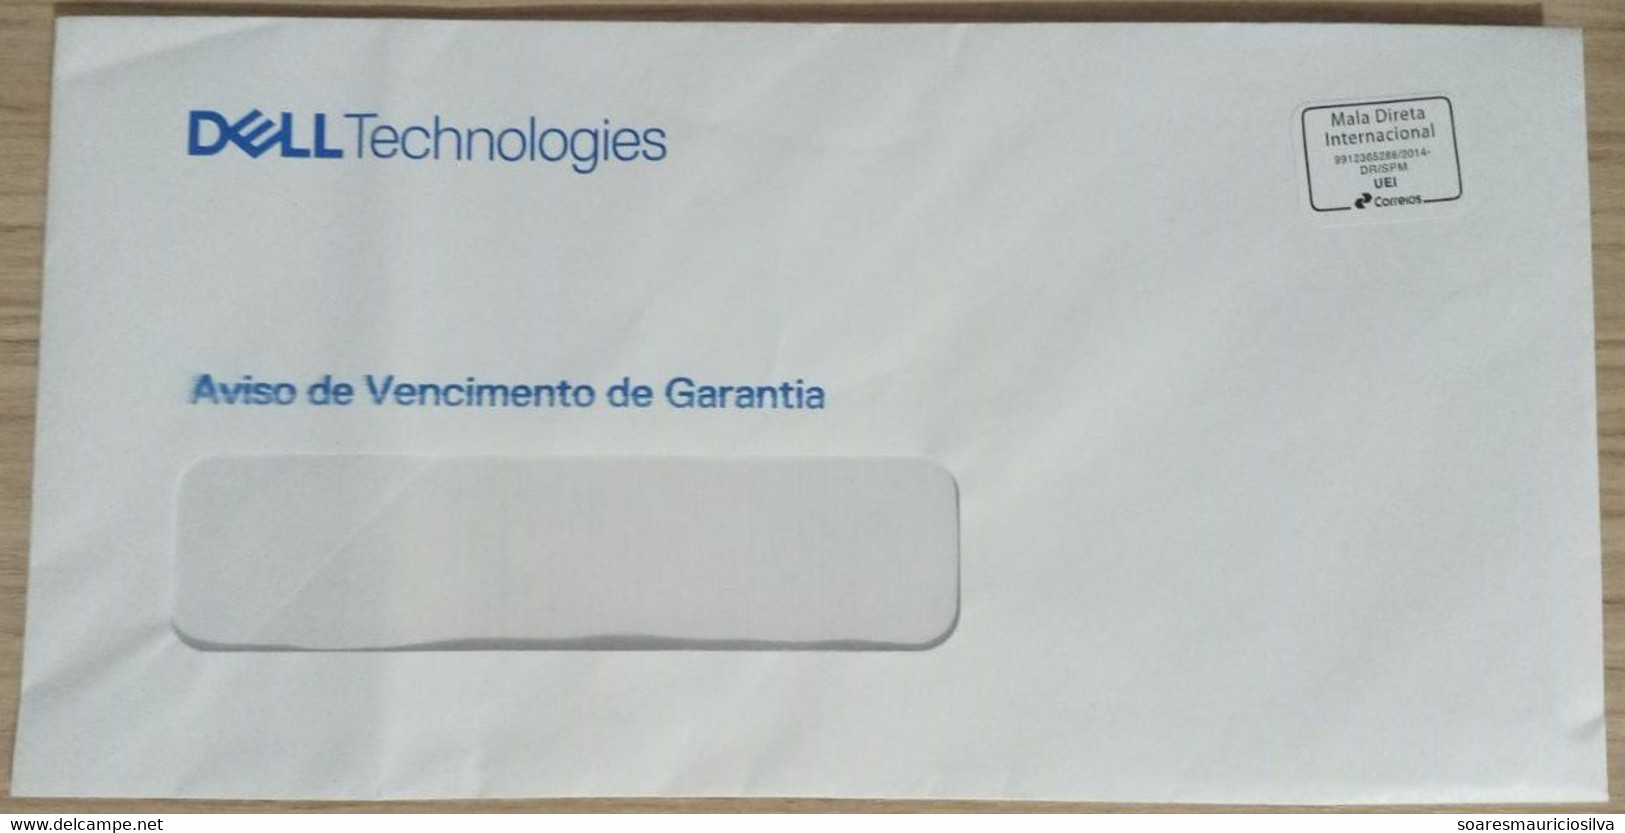 Brazil 2014 Dell Technologies Cover Label international Direct Mail Contract Regional Board Of Metropolitan São Paulo - Briefe U. Dokumente